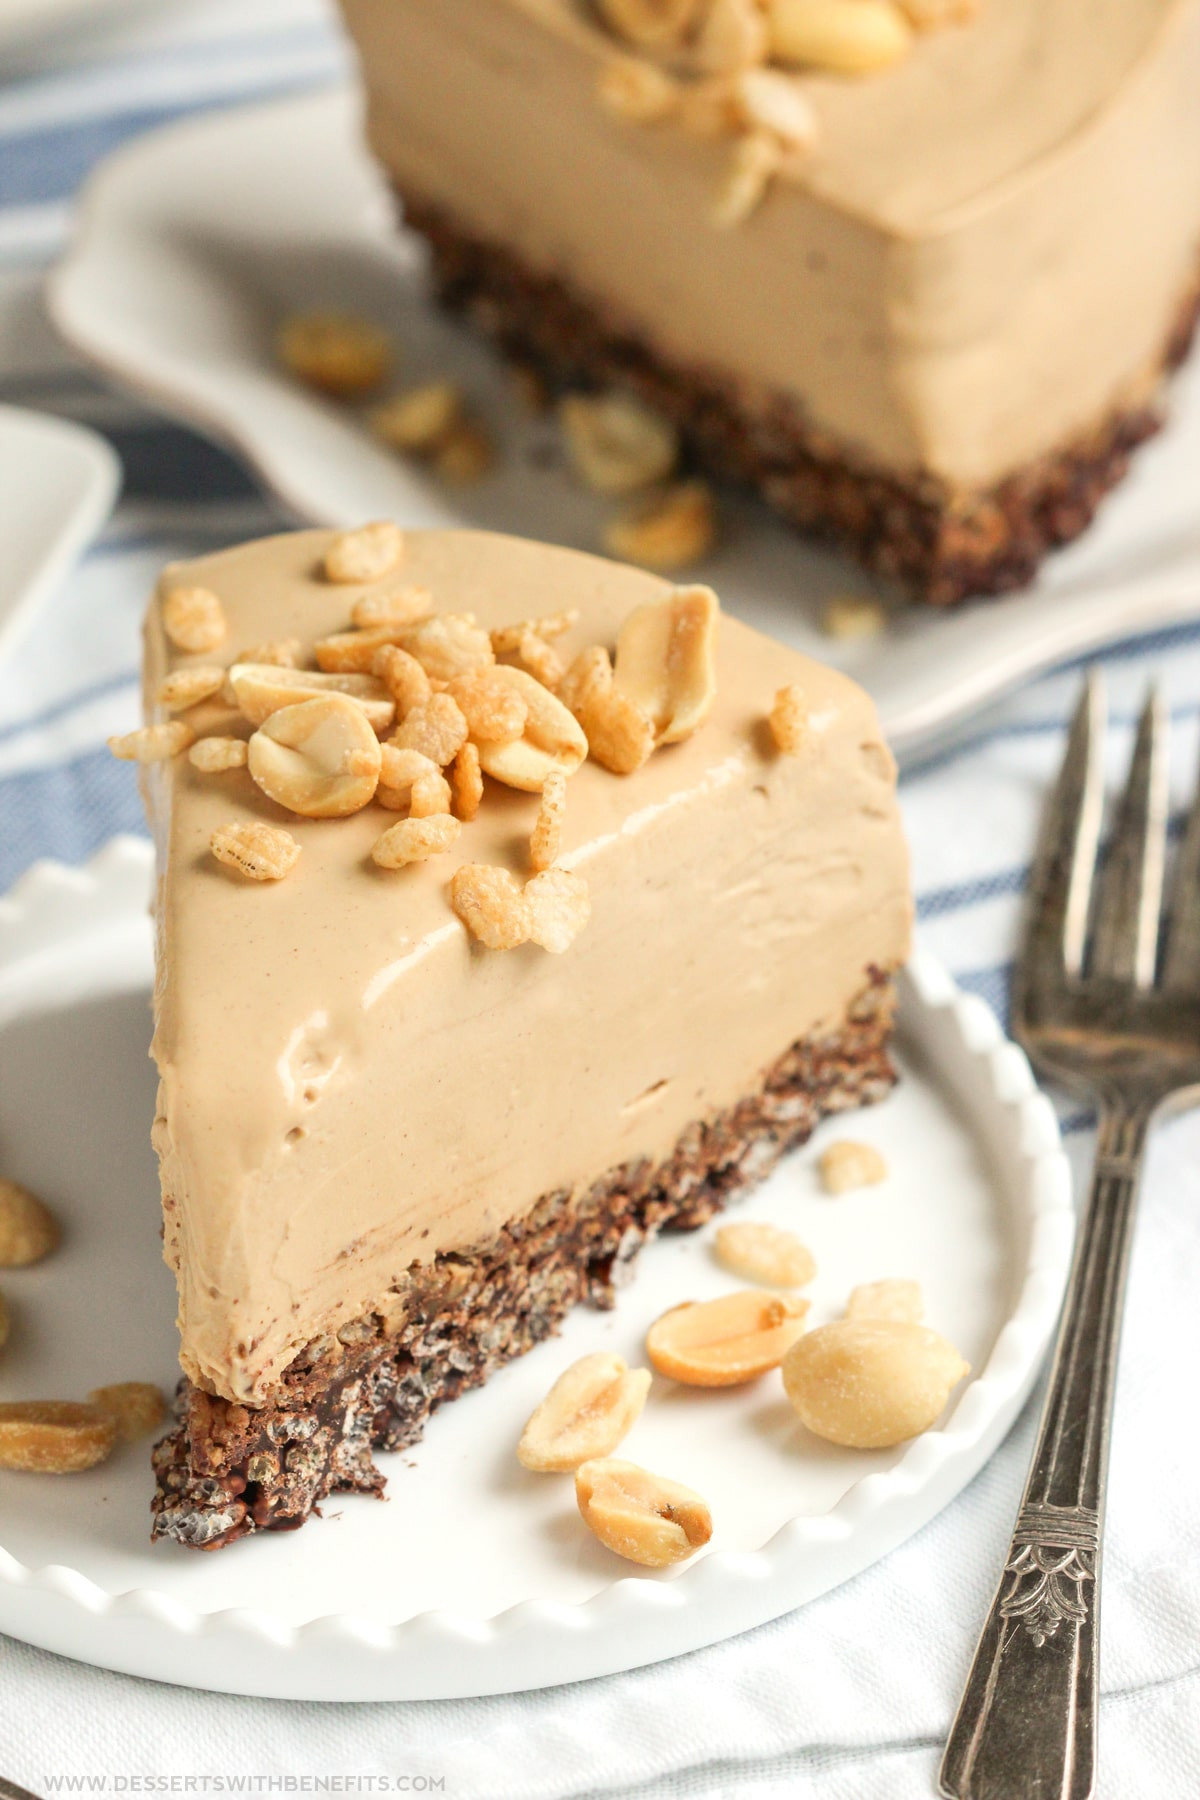 Healthy Peanut Butter Dessert Recipes
 Healthy Peanut Butter Chocolate Crunch Pie